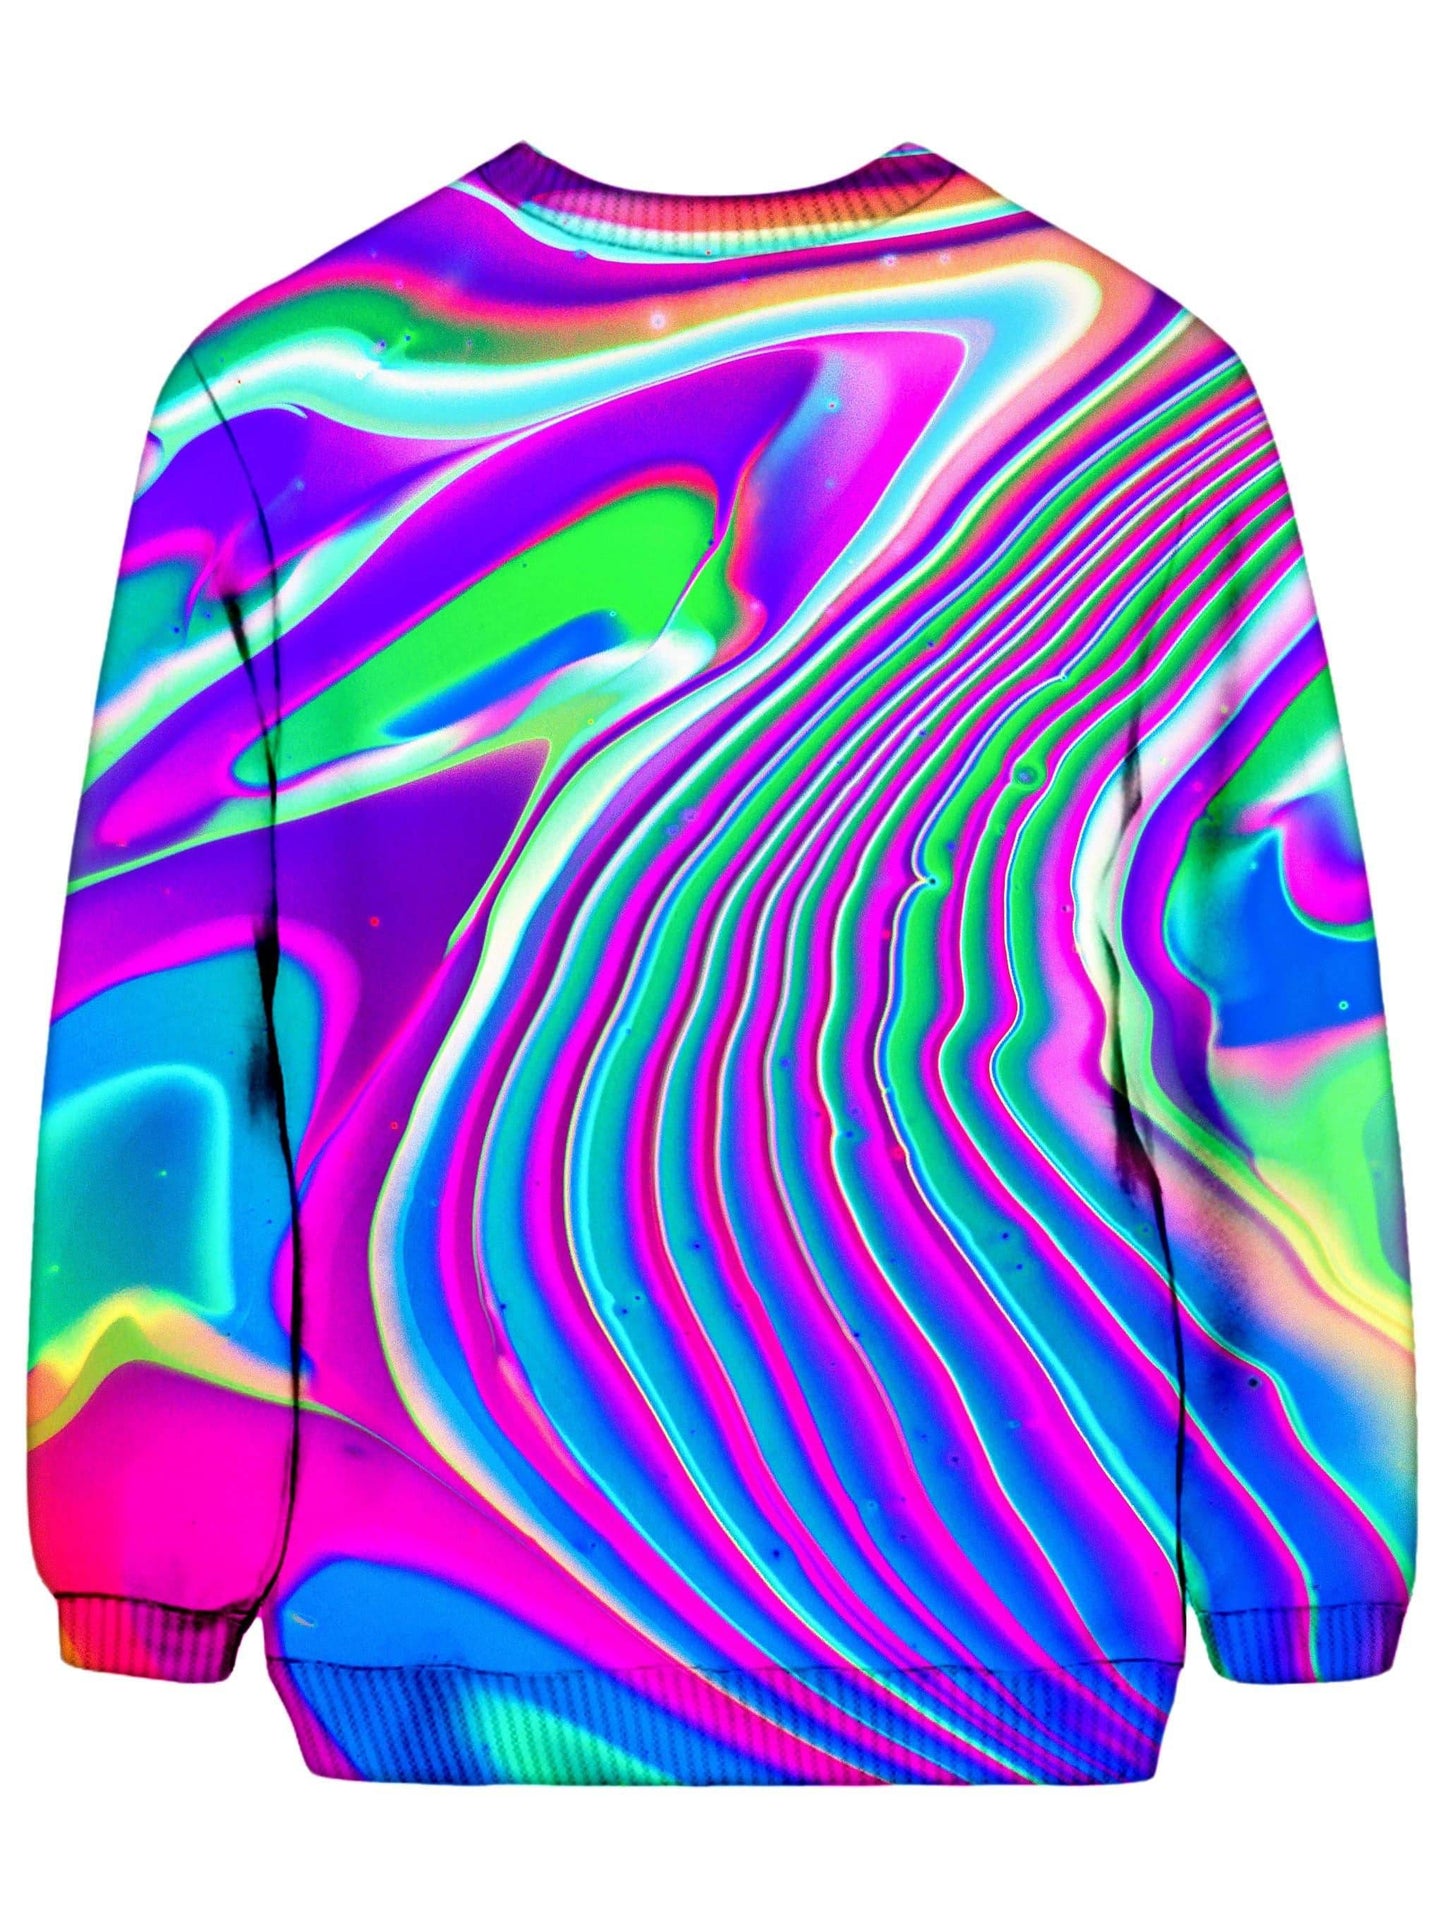 Tangerine Dream Sweatshirt, Psychedelic Pourhouse, | iEDM